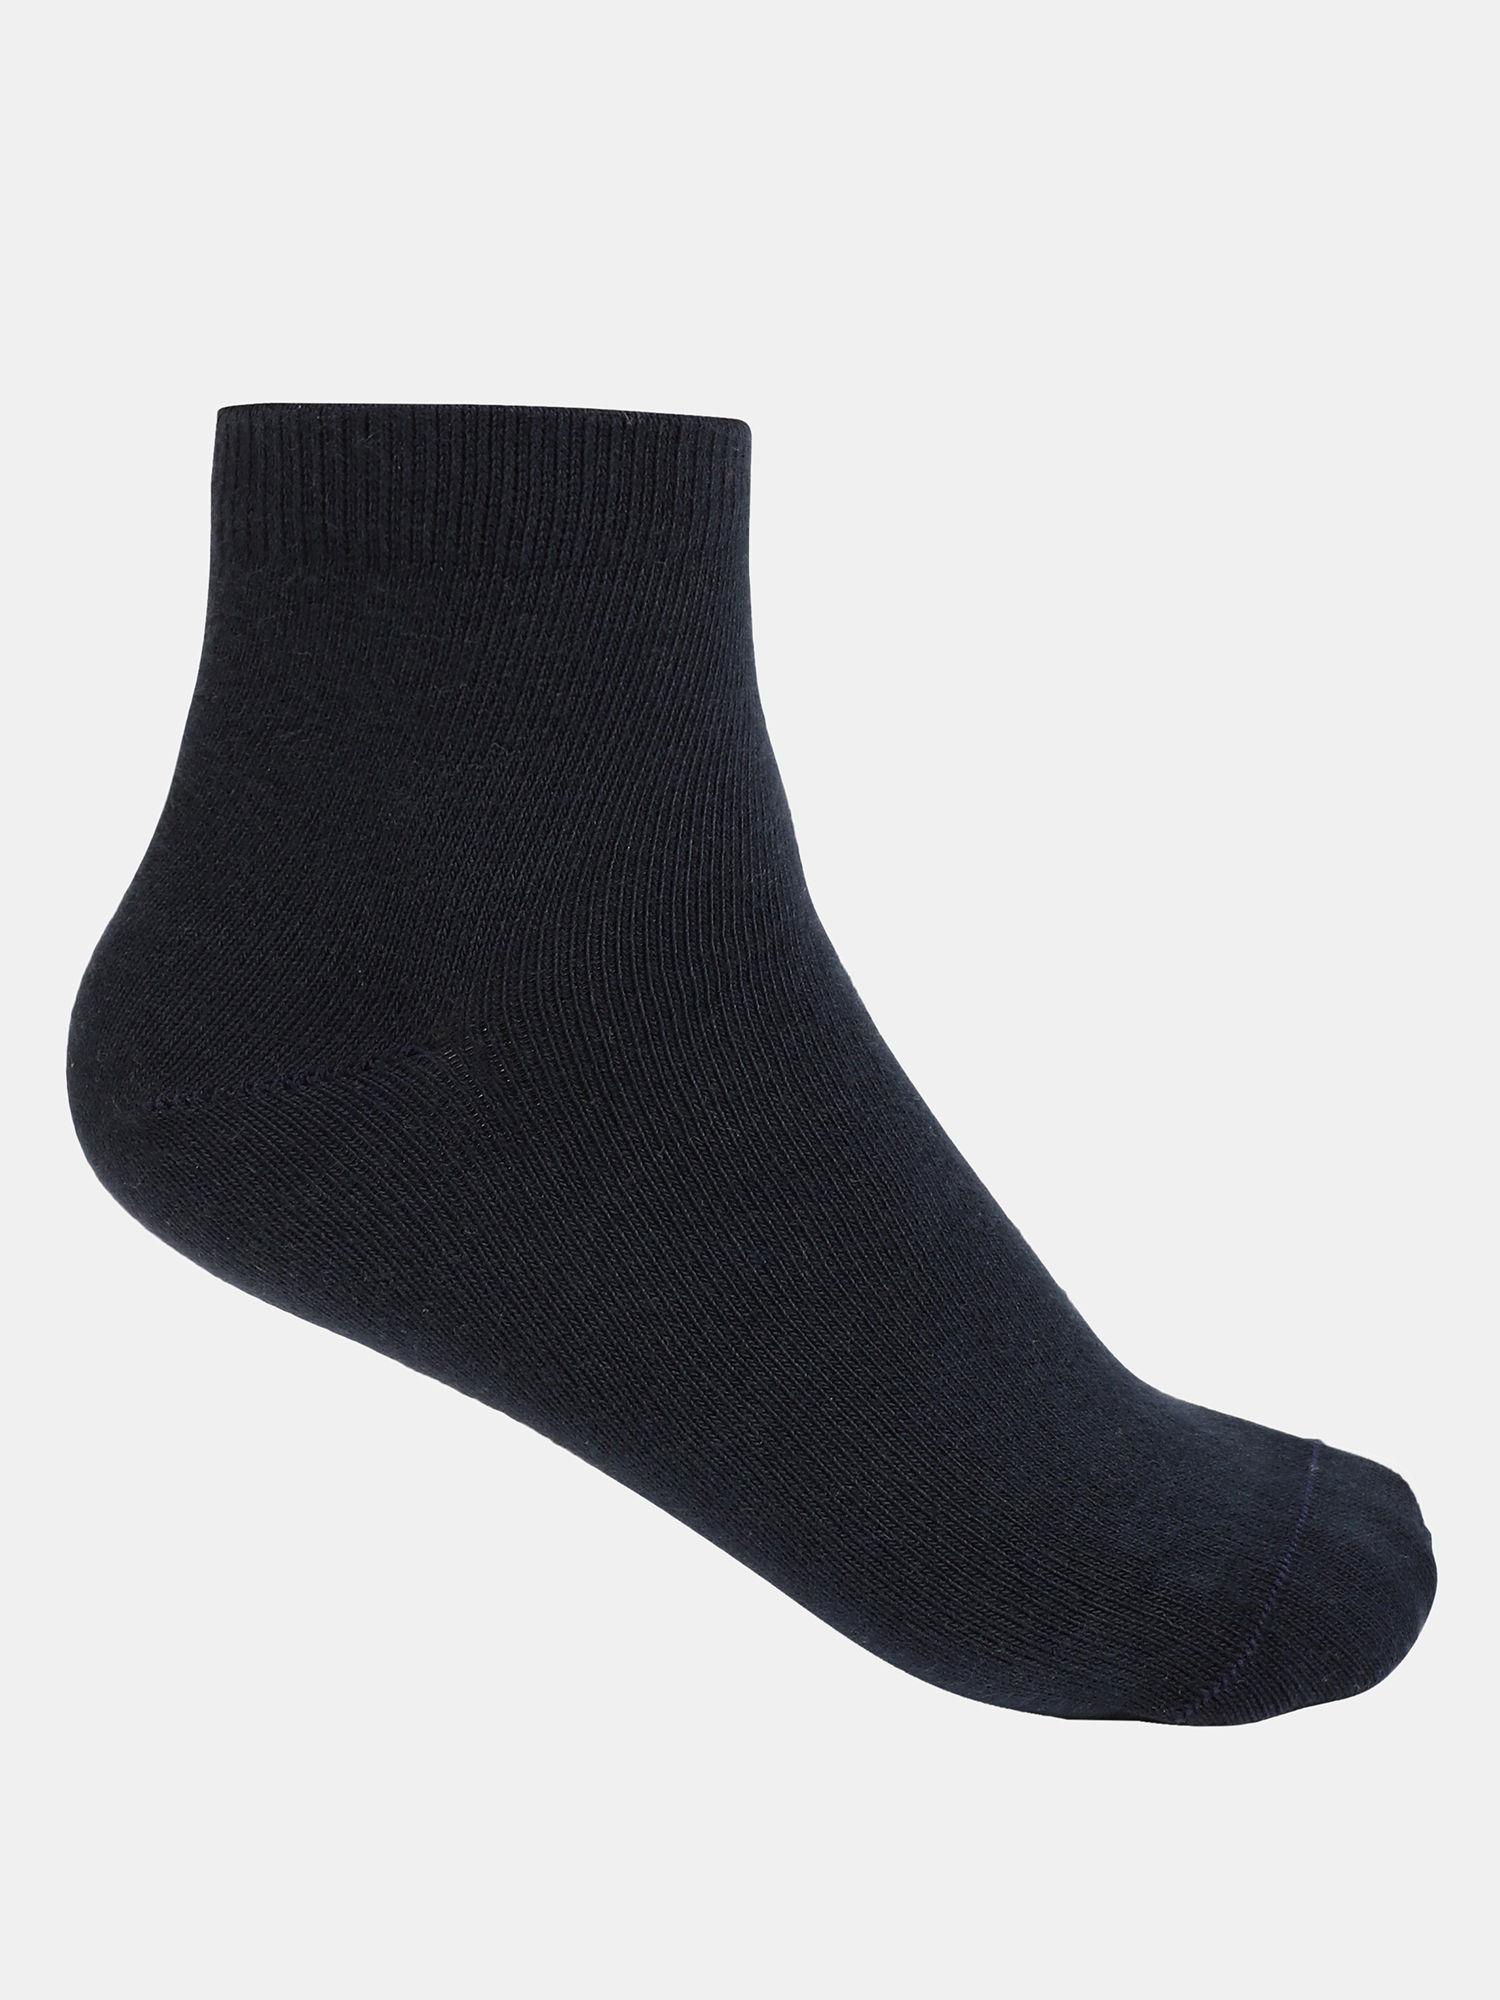 7801 Unisex Cotton Nylon Stretch Ankle Length Socks - Navy